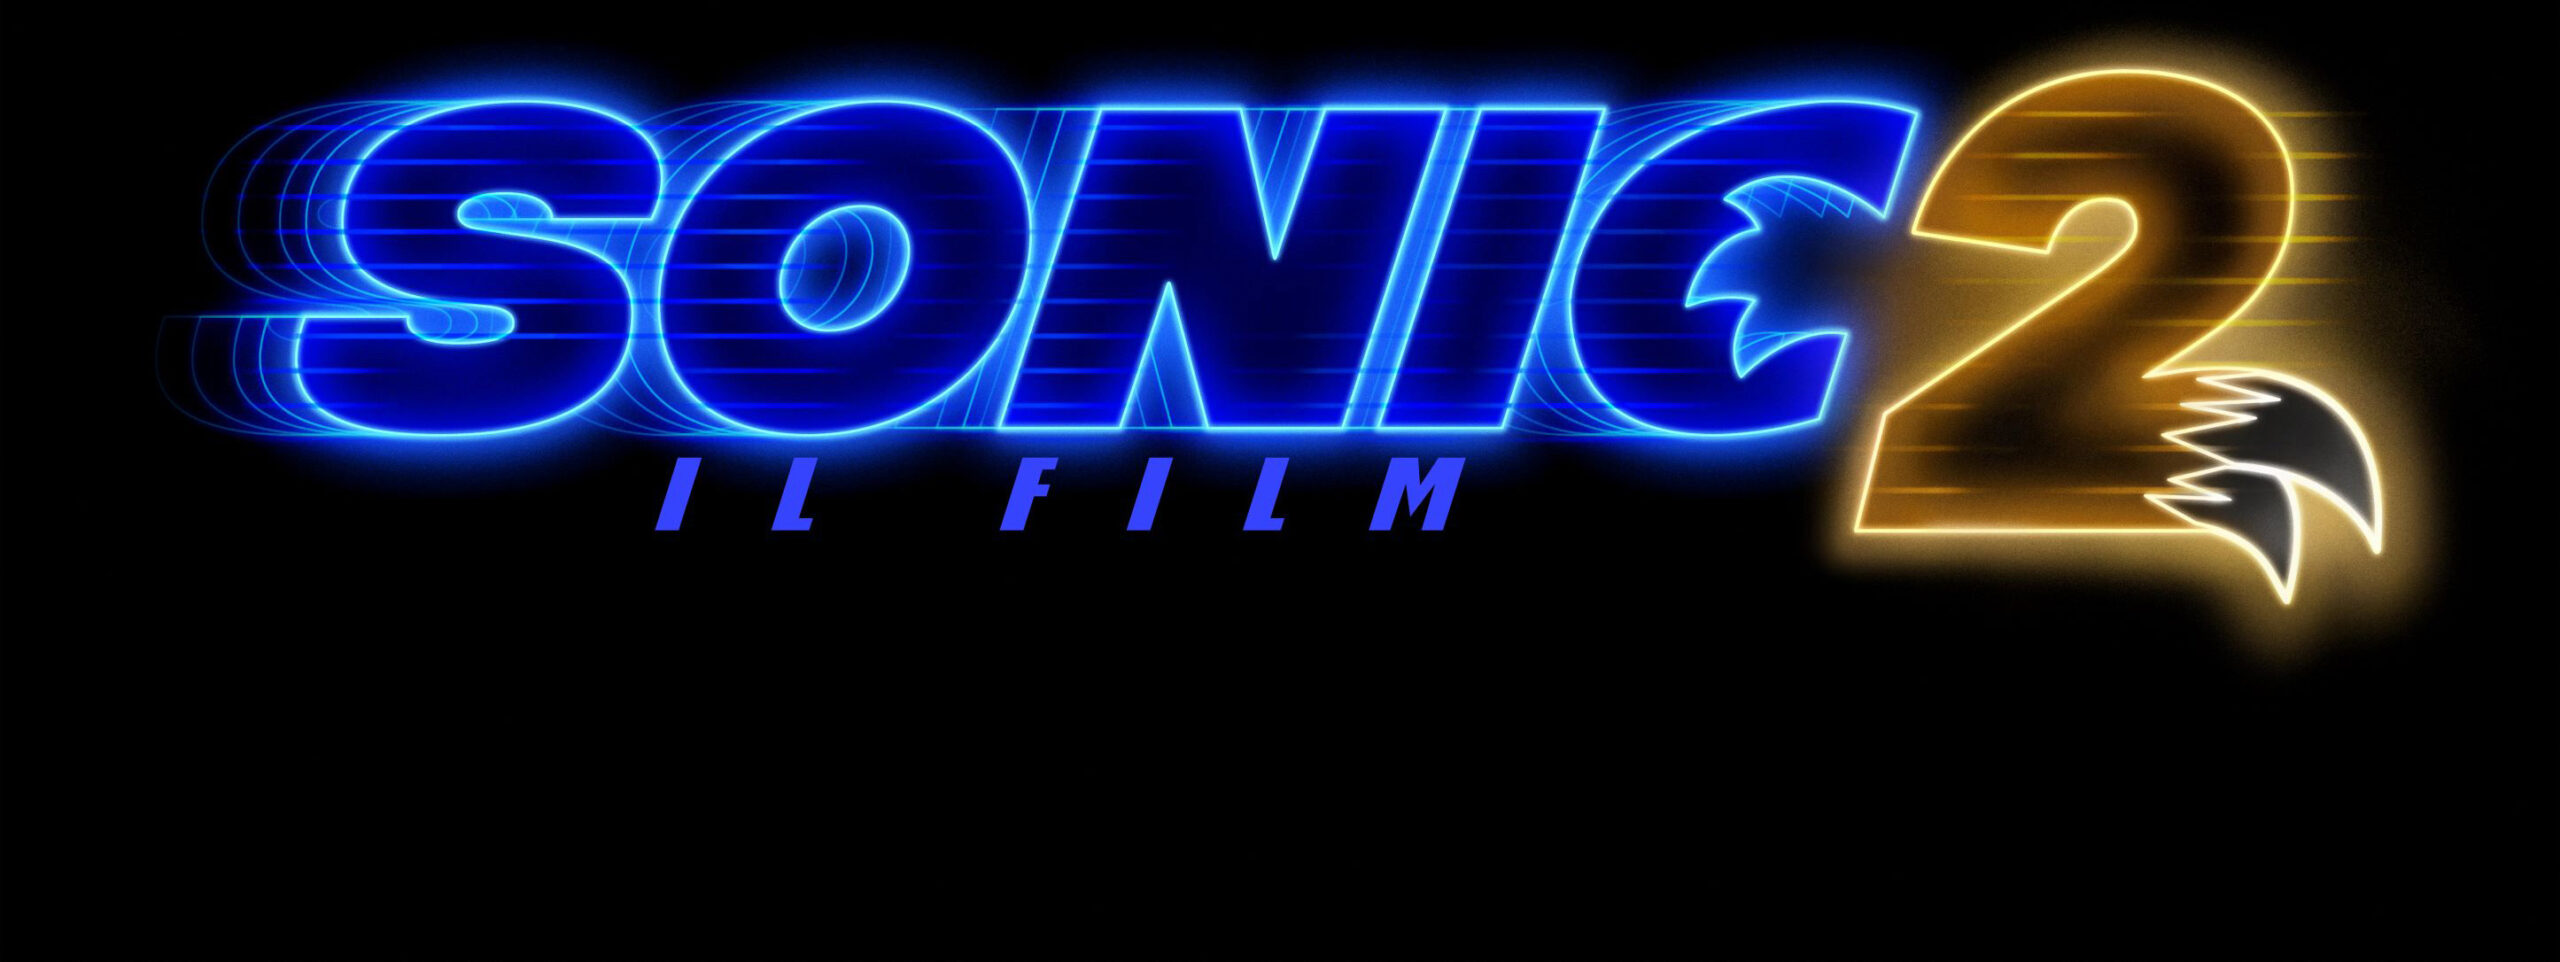 Poster Sonic 2 - Il Film